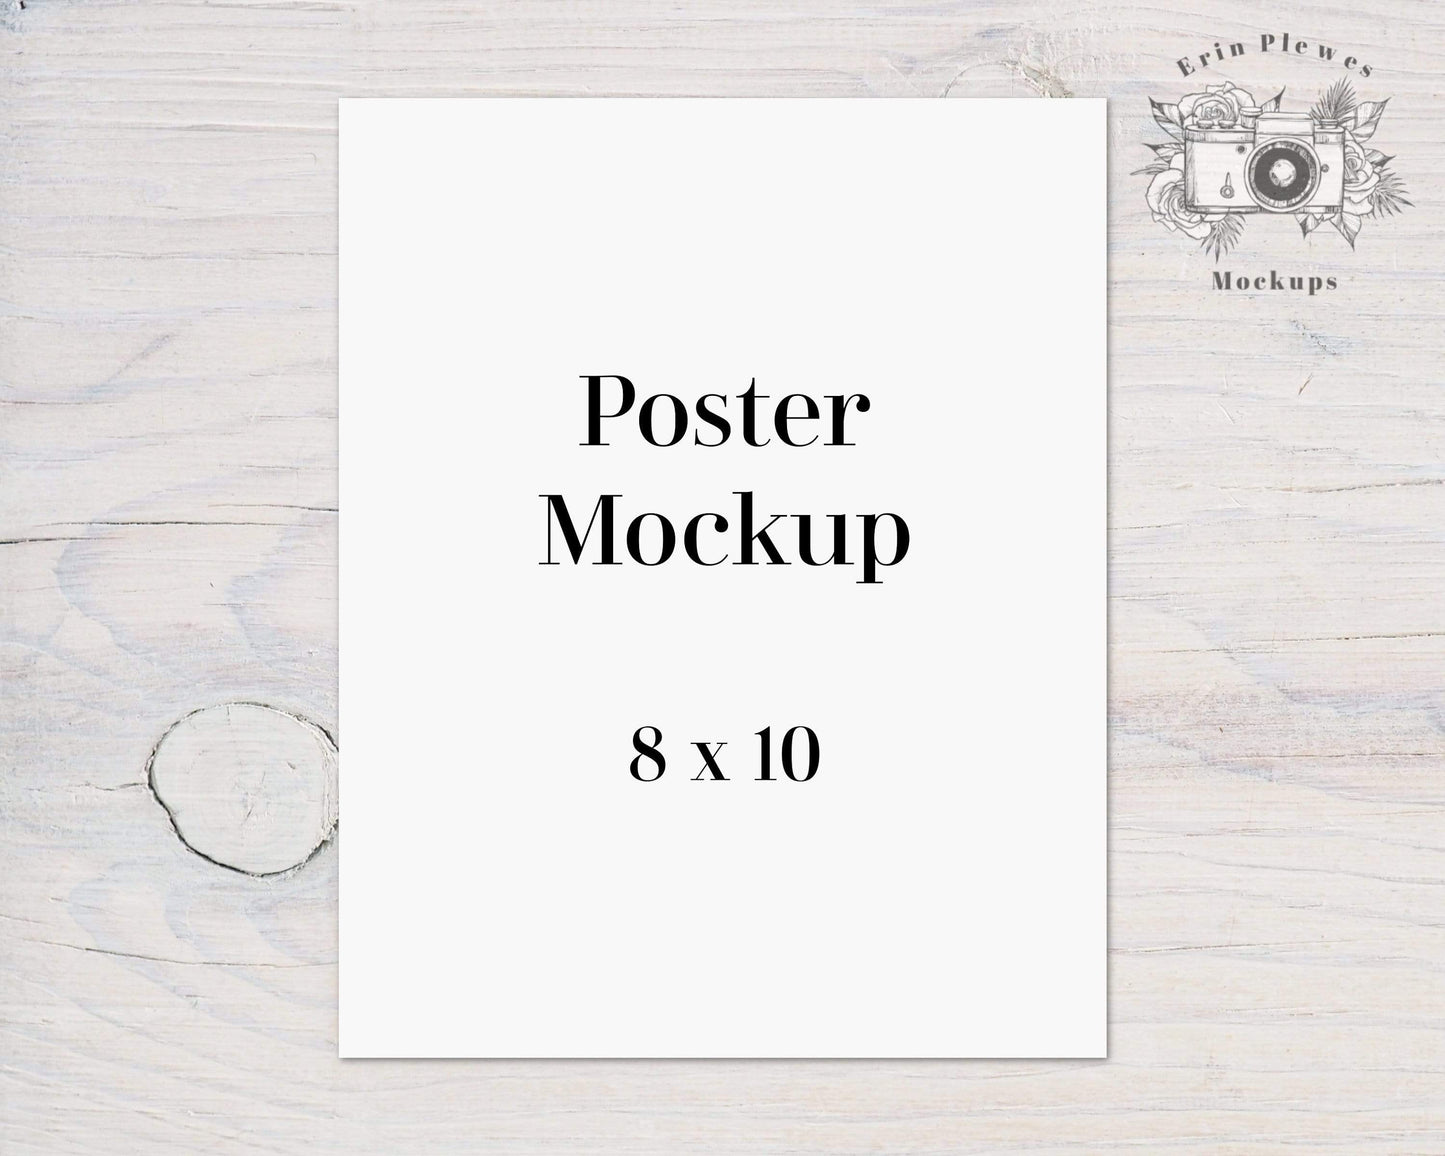 Erin Plewes Mockups Poster Mockup 8x10, Print mockup 8"x10" on white farmhouse rustic wood, Minimalist mock up Instant Digital Download Template